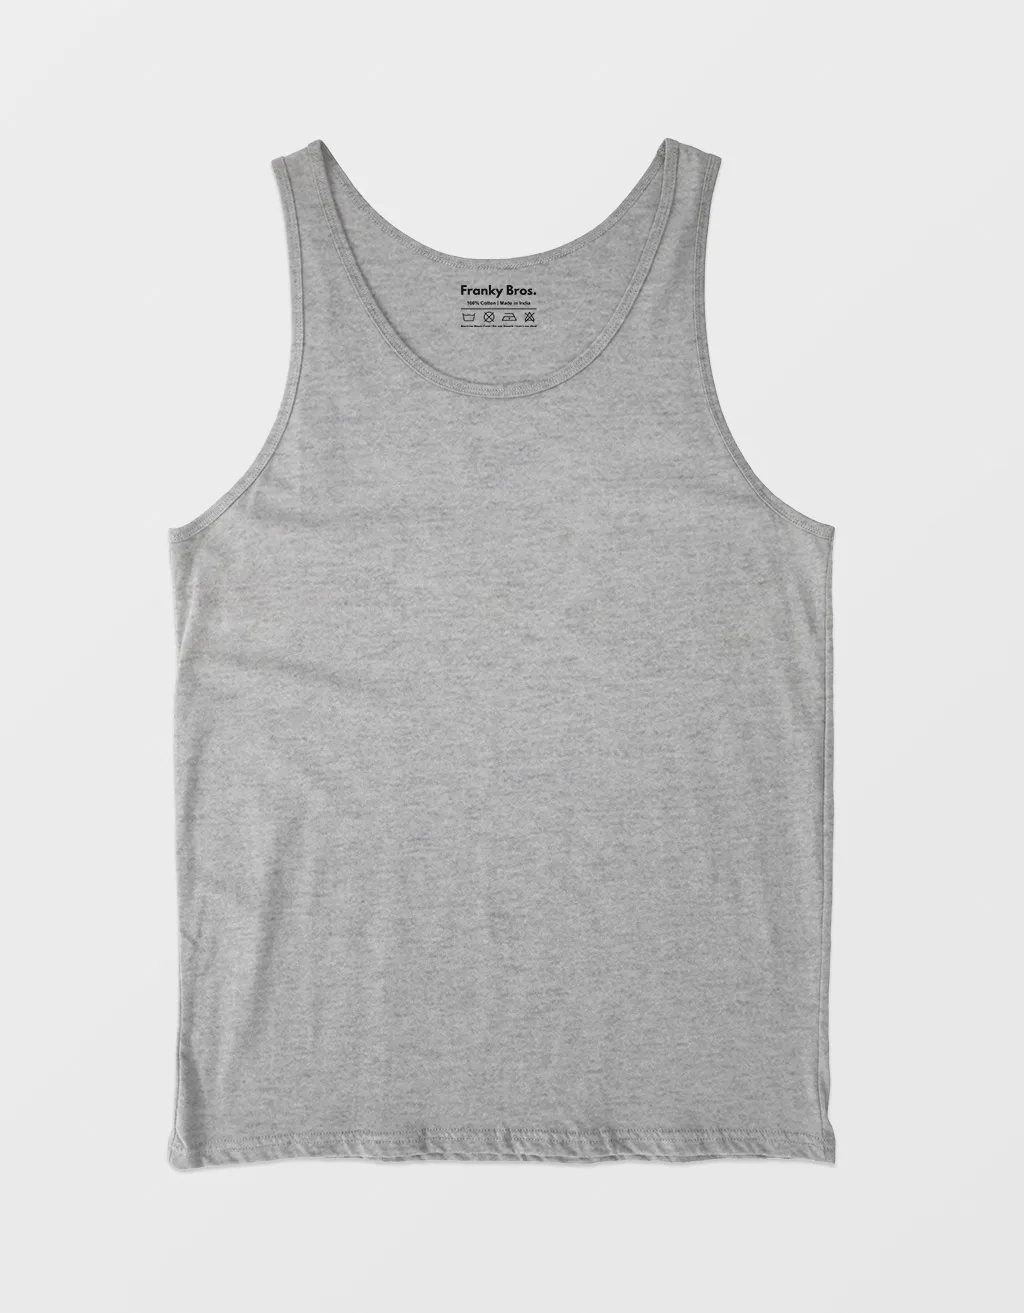 grey tank top for women and men gym vests online